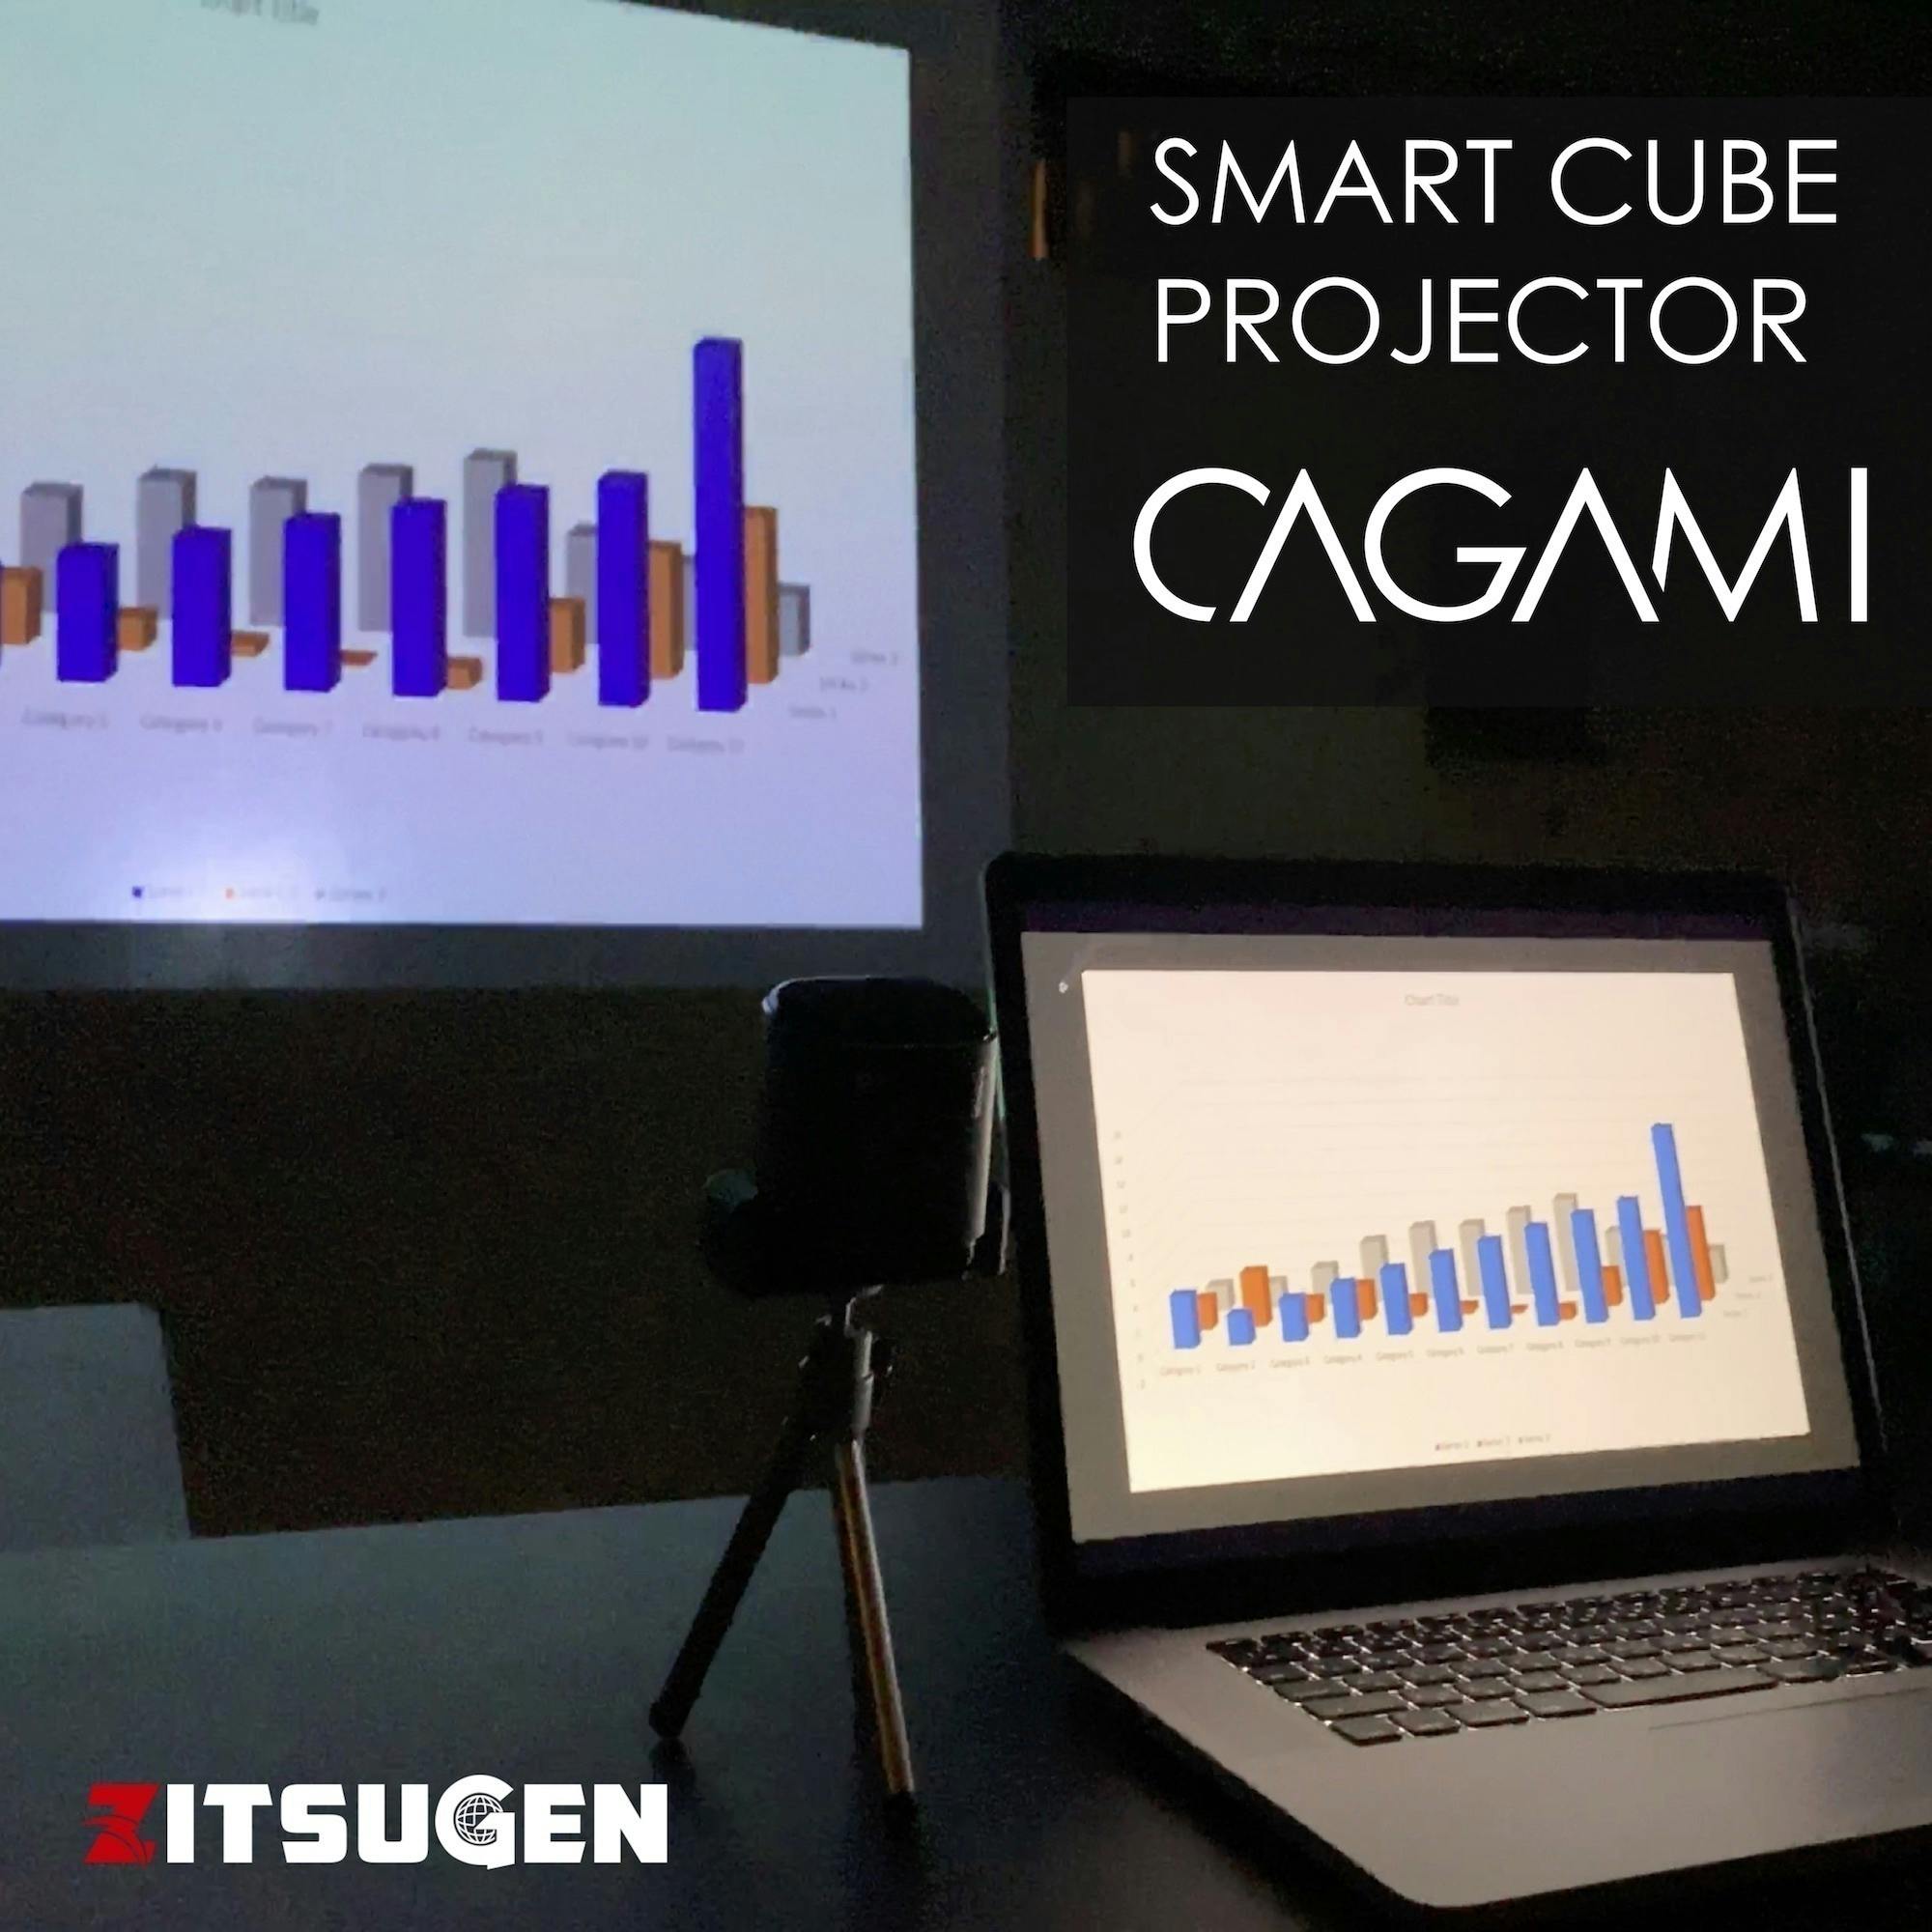 cagami スマートキューブプロジェクター - プロジェクター